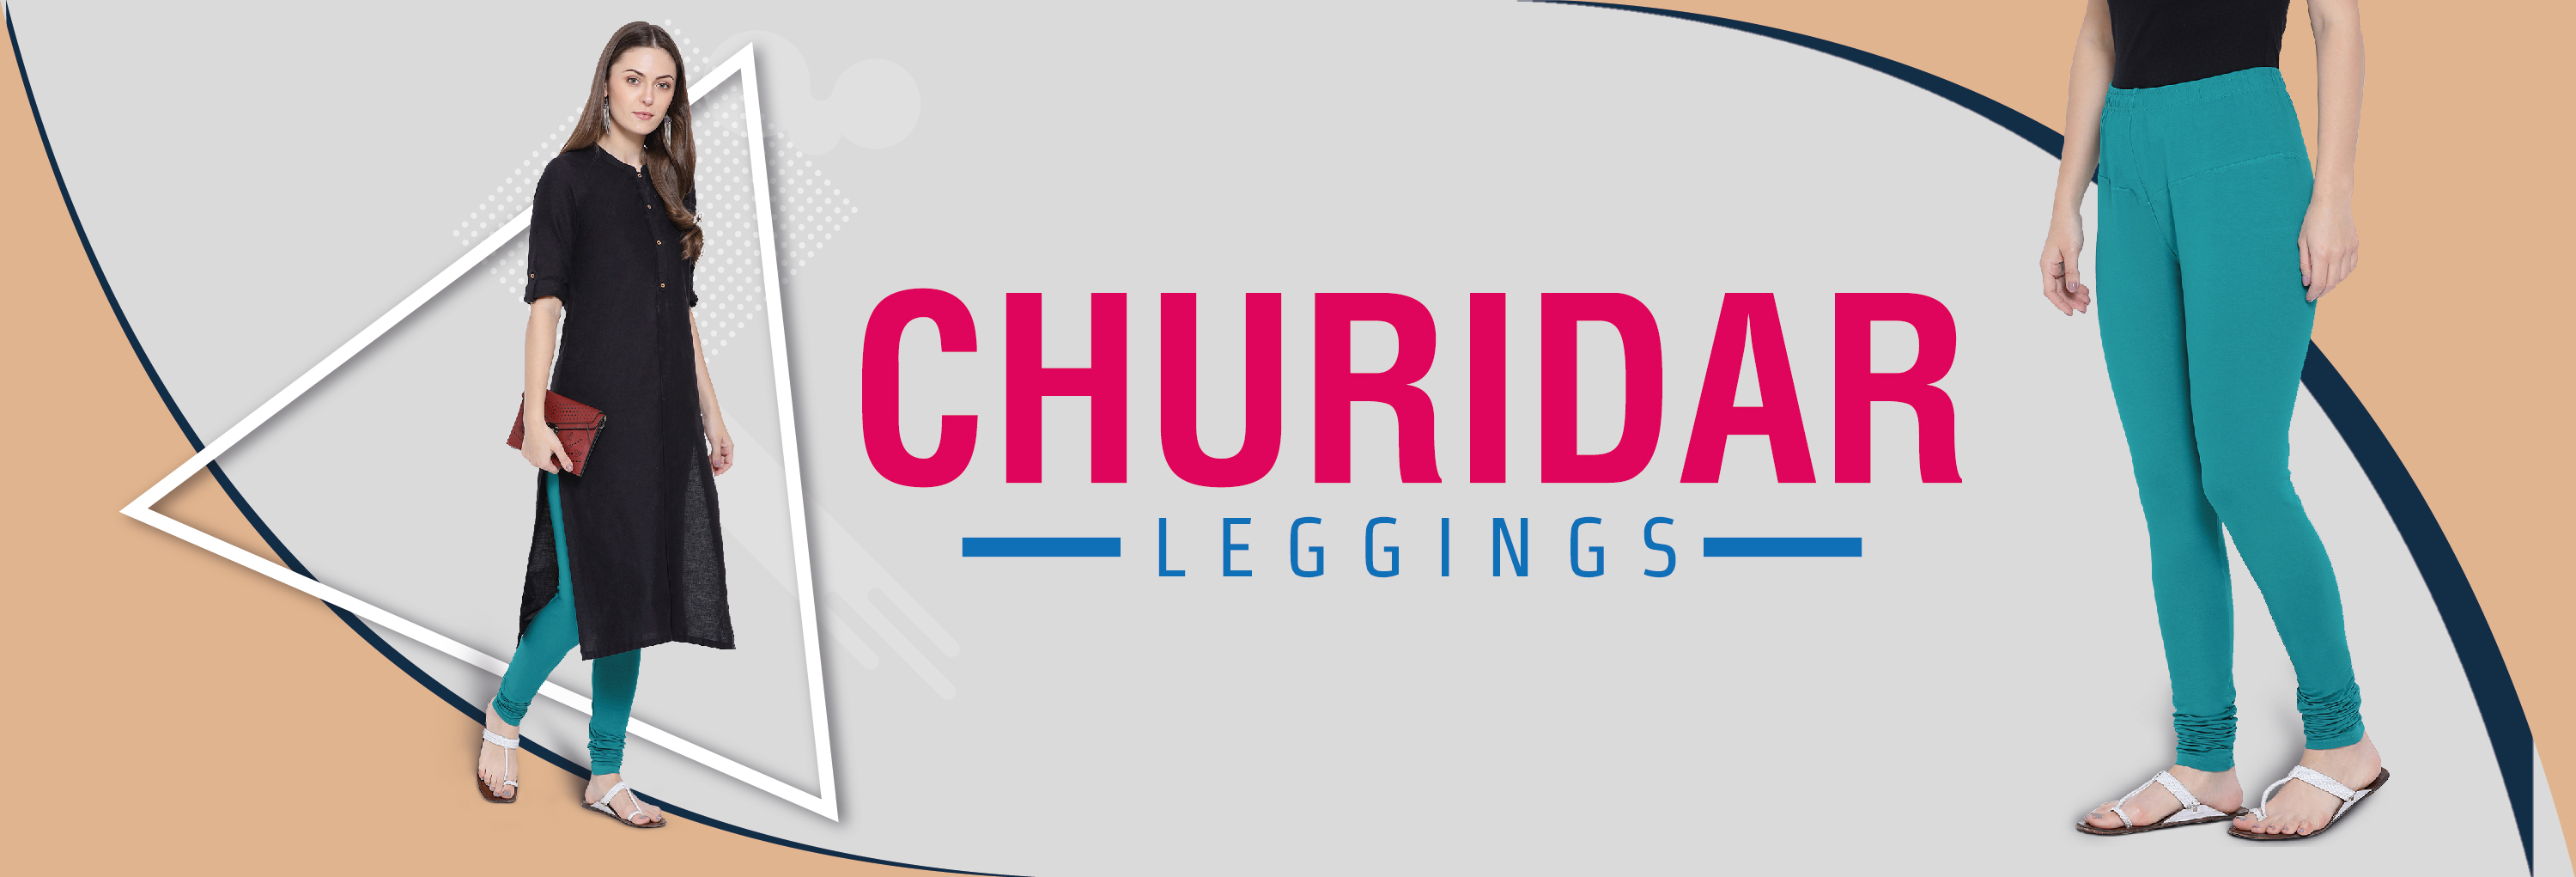 SOFTLINE Churidar Length Ethnic Wear Legging Price in India - Buy